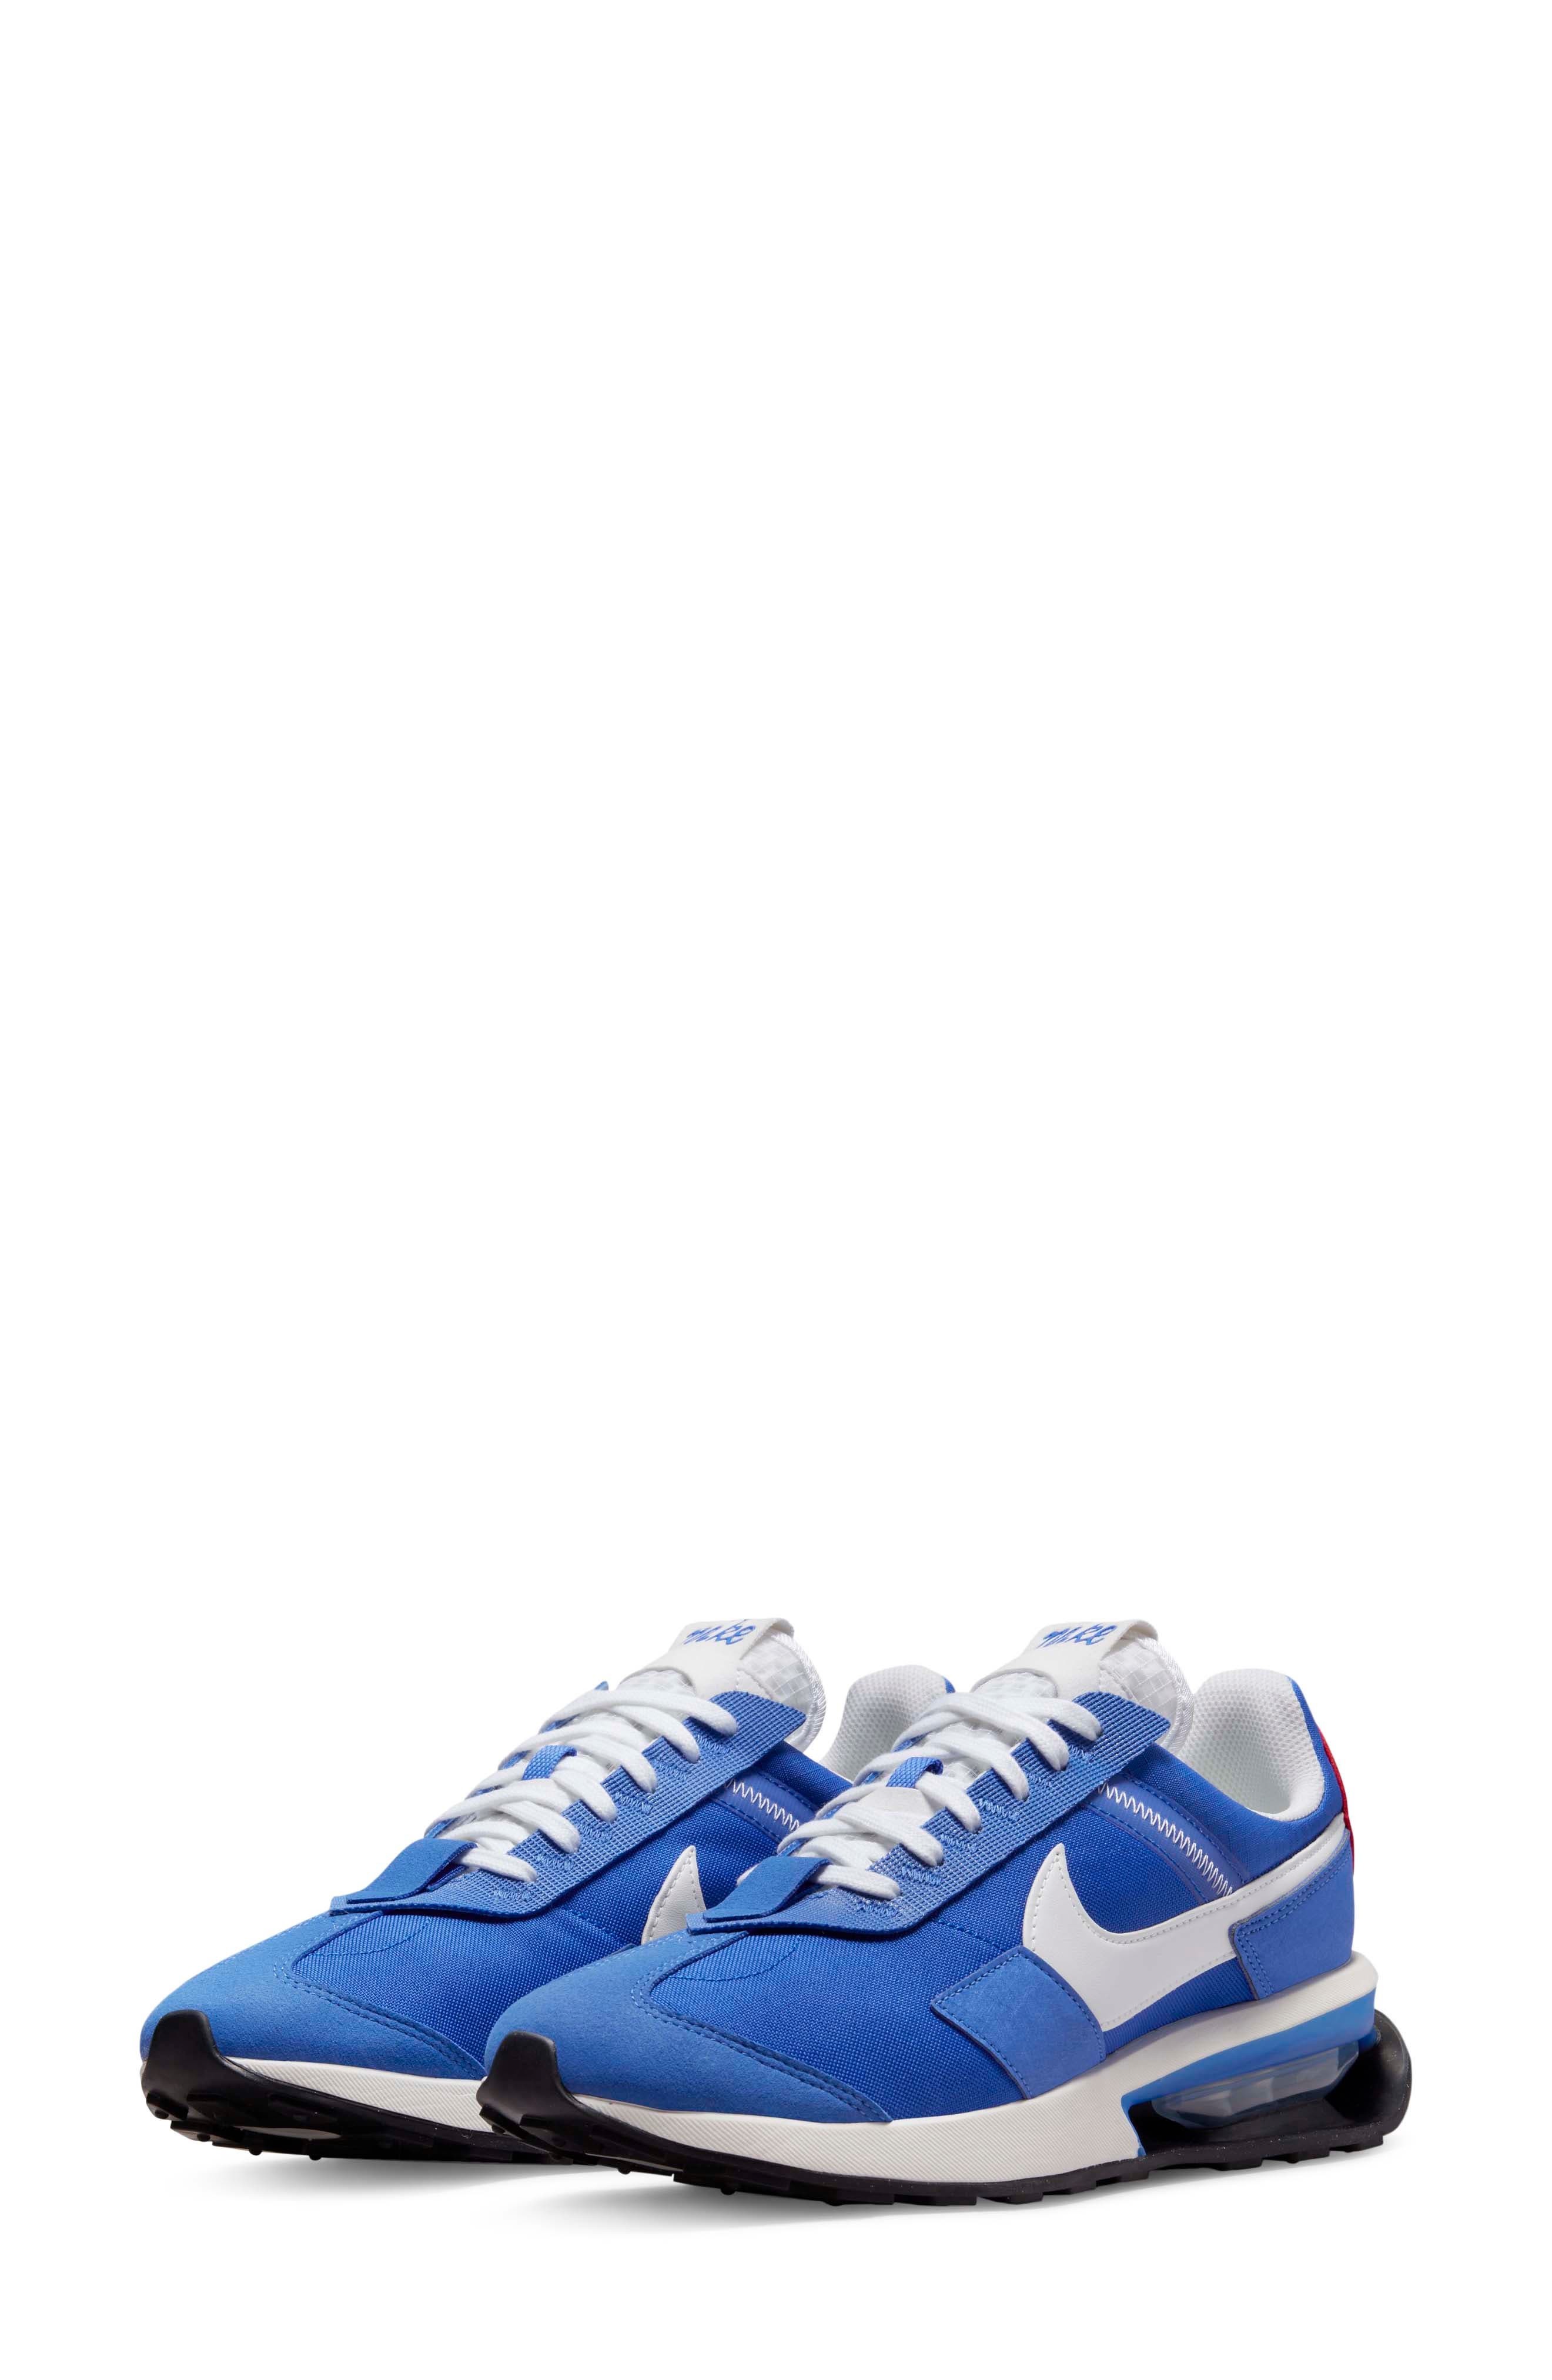 royal blue shoes | Nordstrom